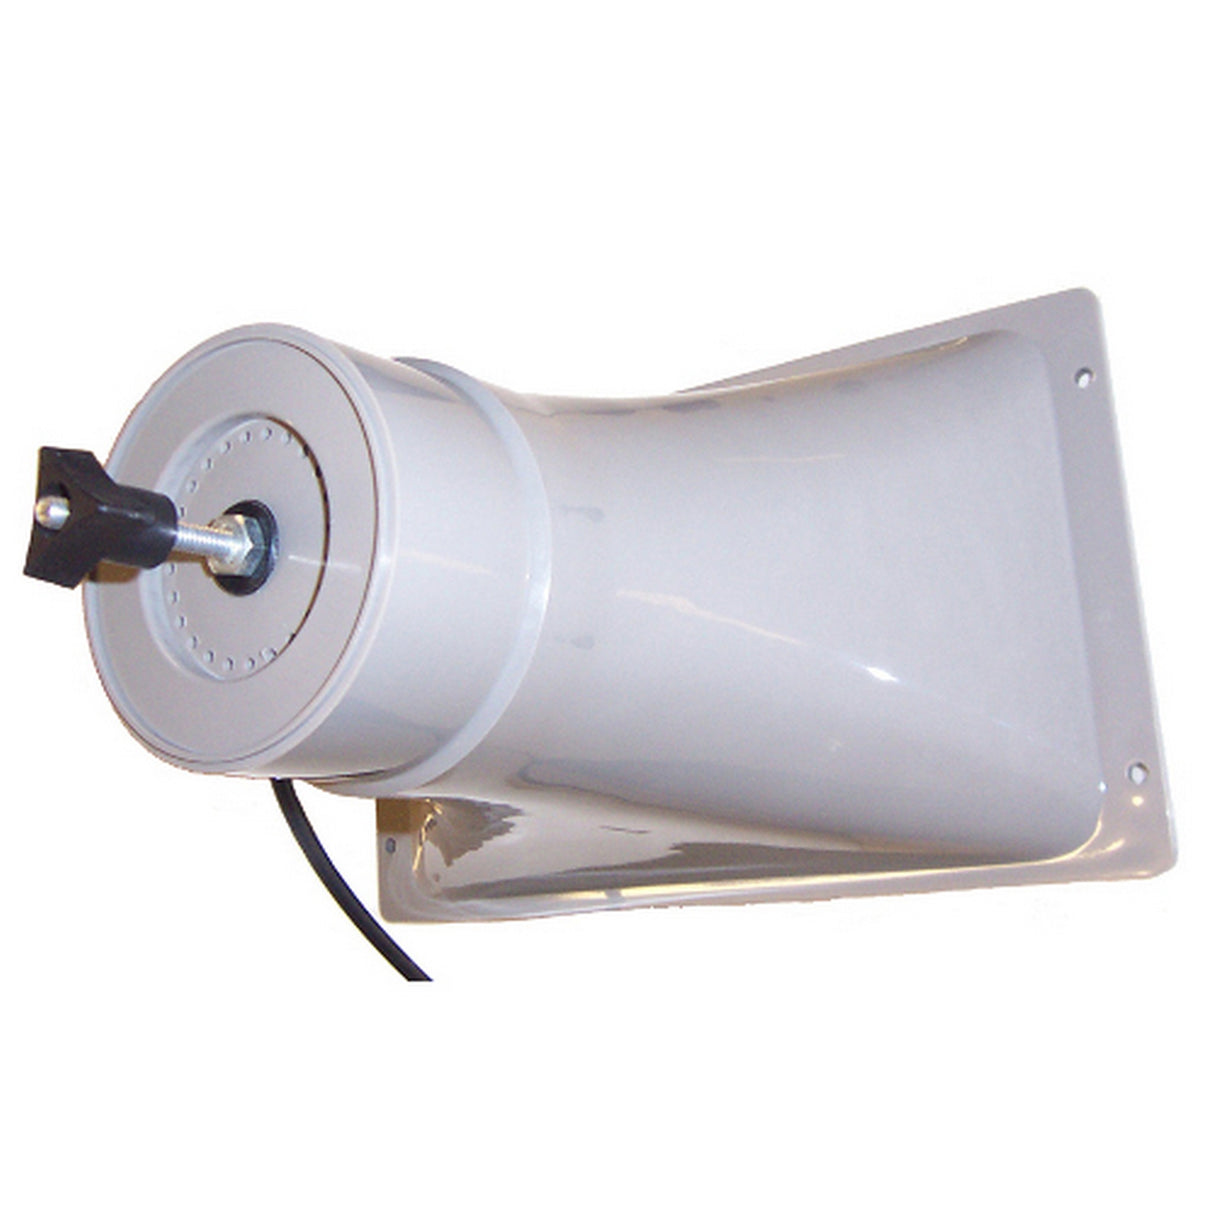 AmpliVox S1262 Horn Speaker with Side Mount Hardware